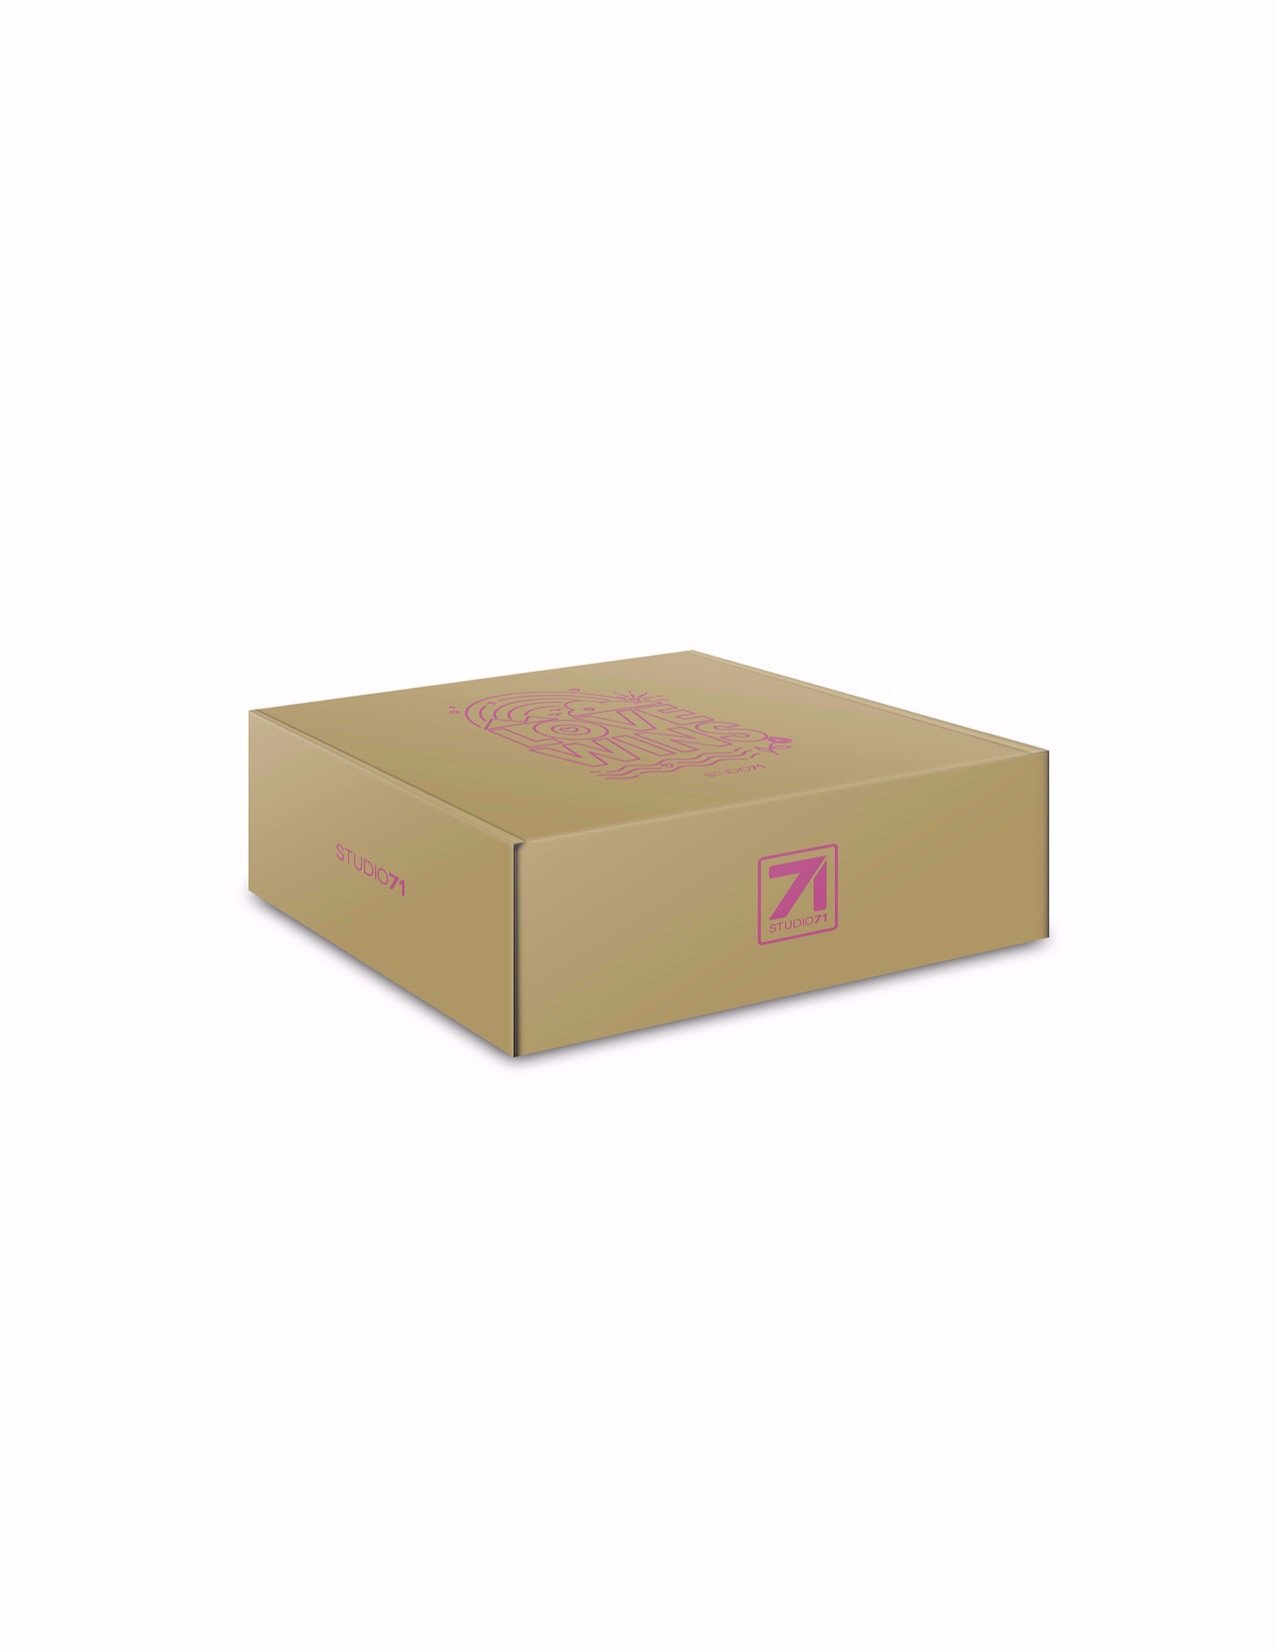 S71 Pride Box (with BONUS sunglasses) – Studio71